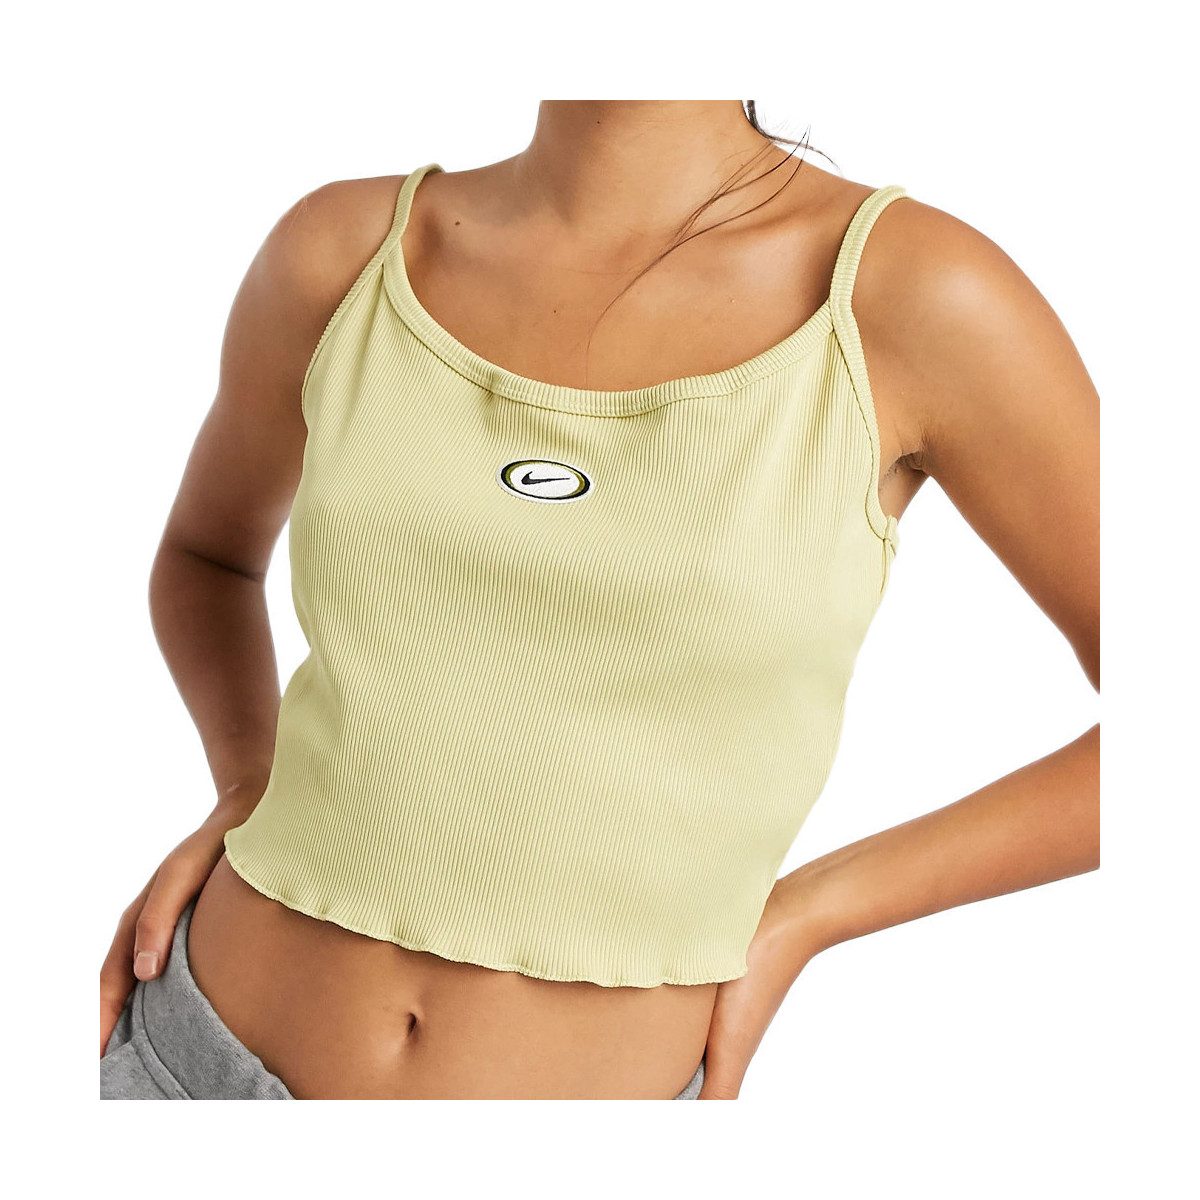 textil Mujer Camisetas sin mangas Nike  Verde